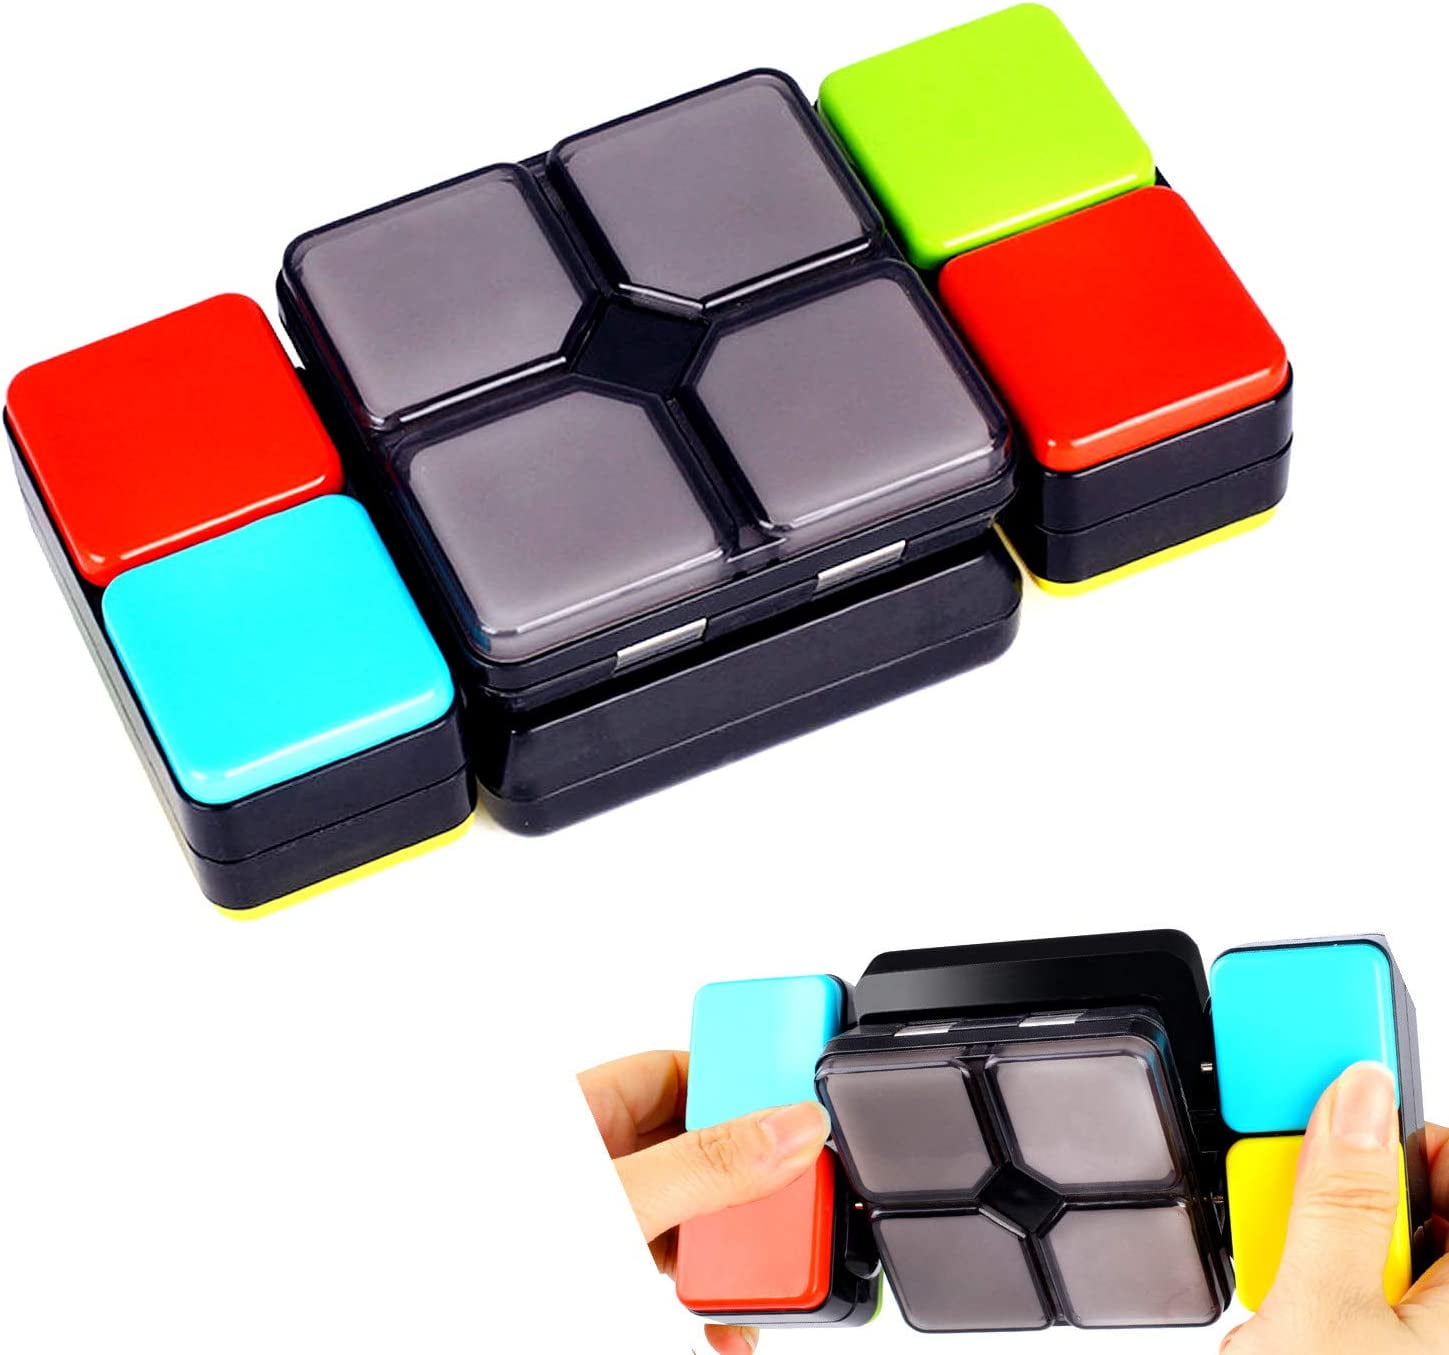 music-magic-cube-toys-electronic-music-cube-speed-cube-novelty-puzzle